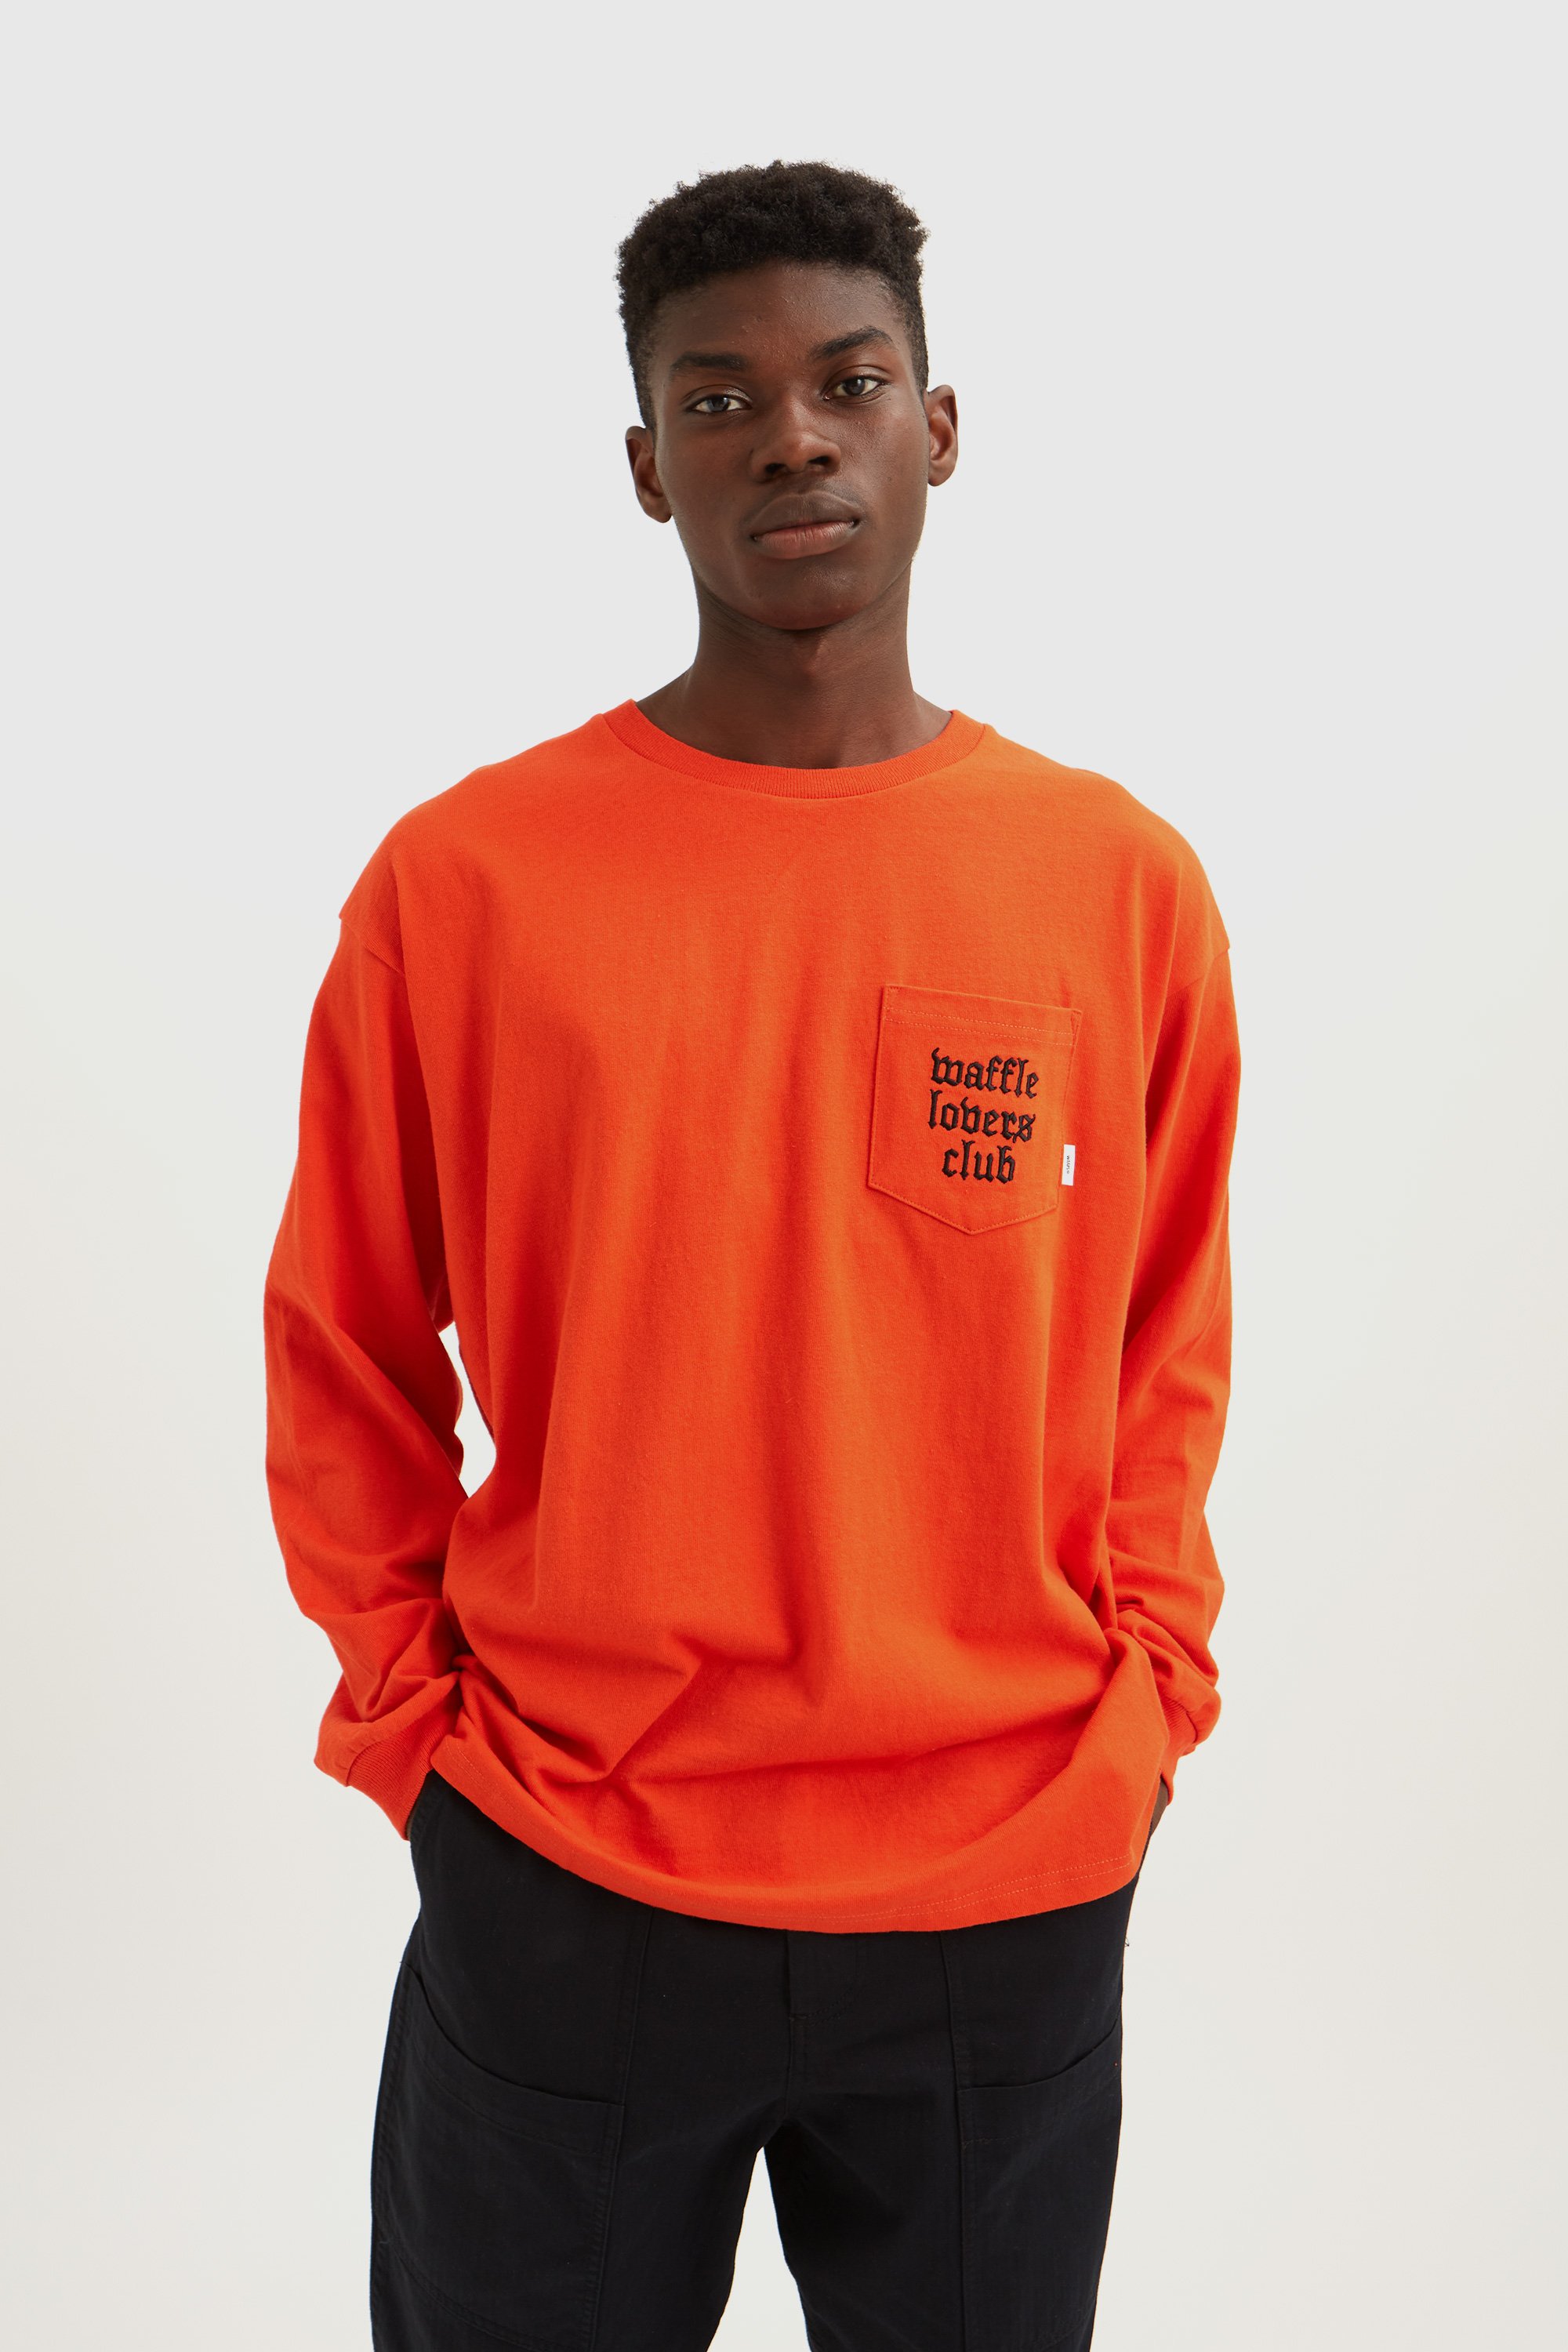 orange vans t shirt